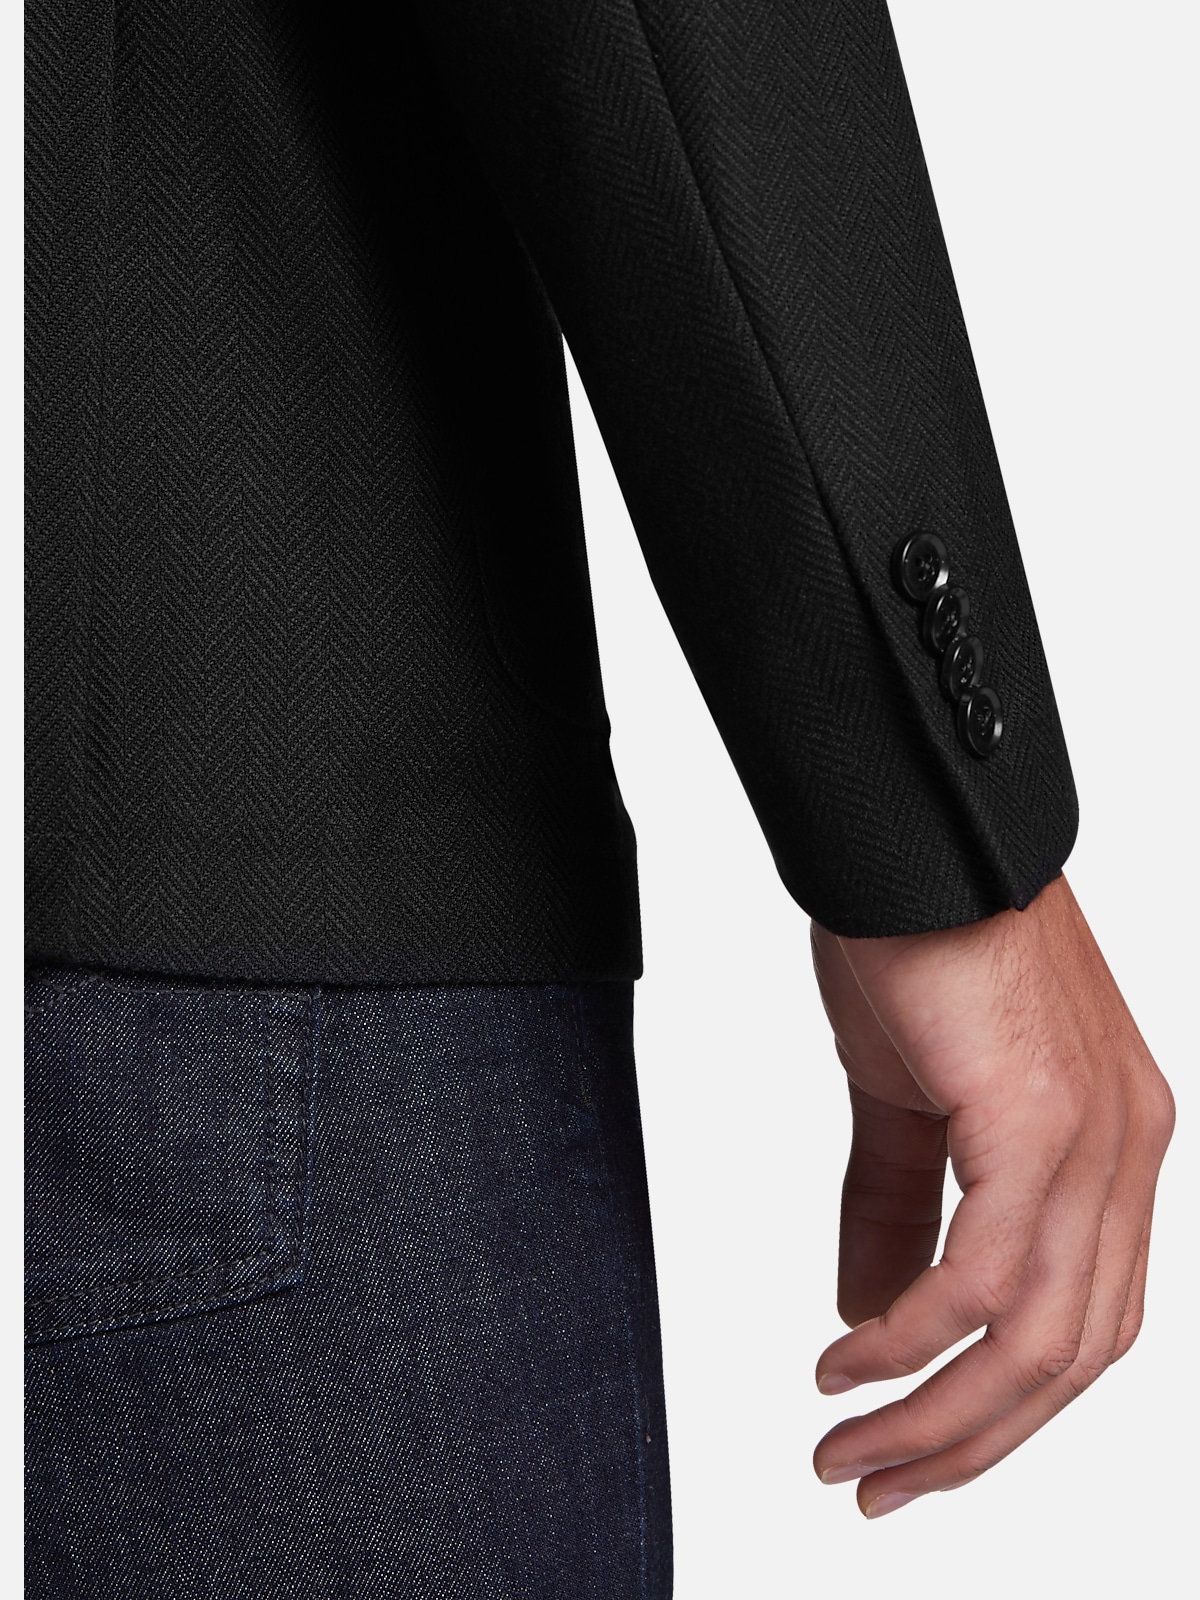 Calvin Klein Slim Fit Sport Coat | All Clothing| Men\'s Wearhouse